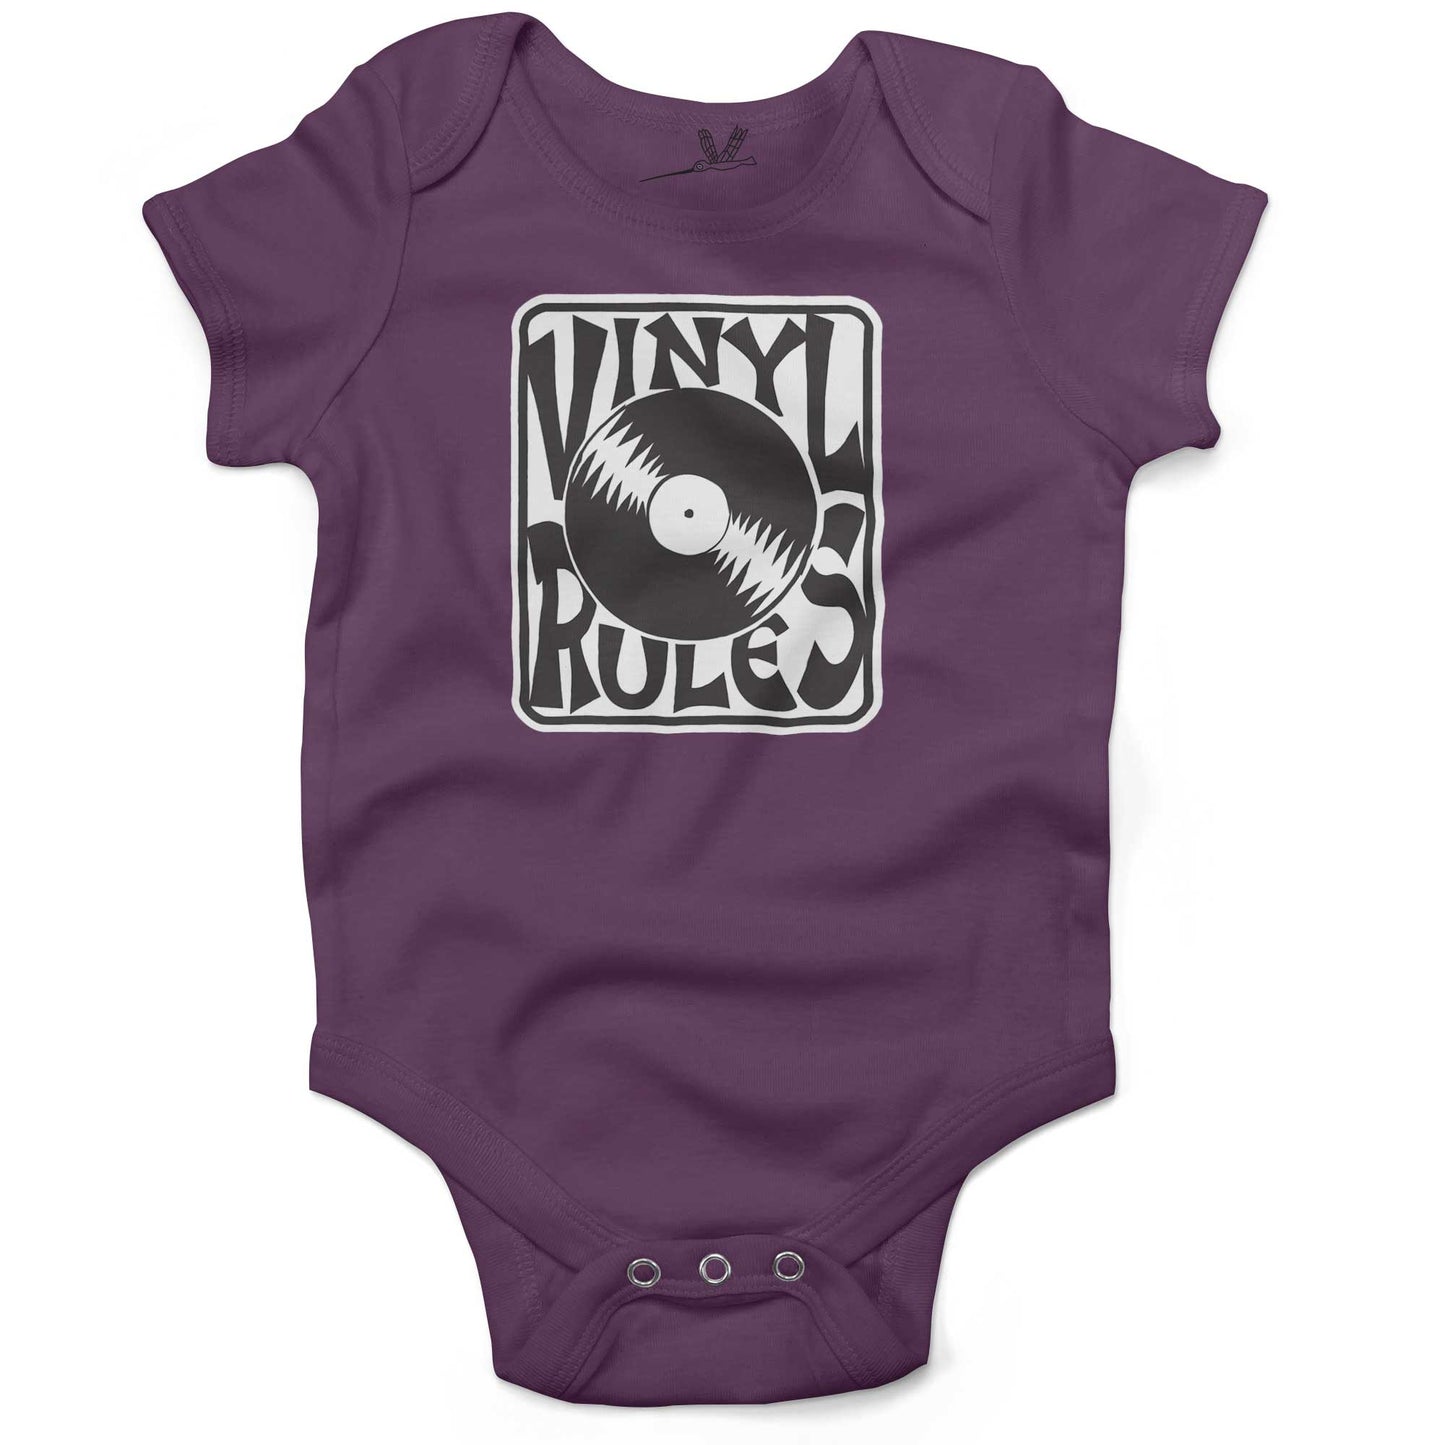 Vinyl Rules Baby One Piece or Raglan Tee-Organic Purple-3-6 months